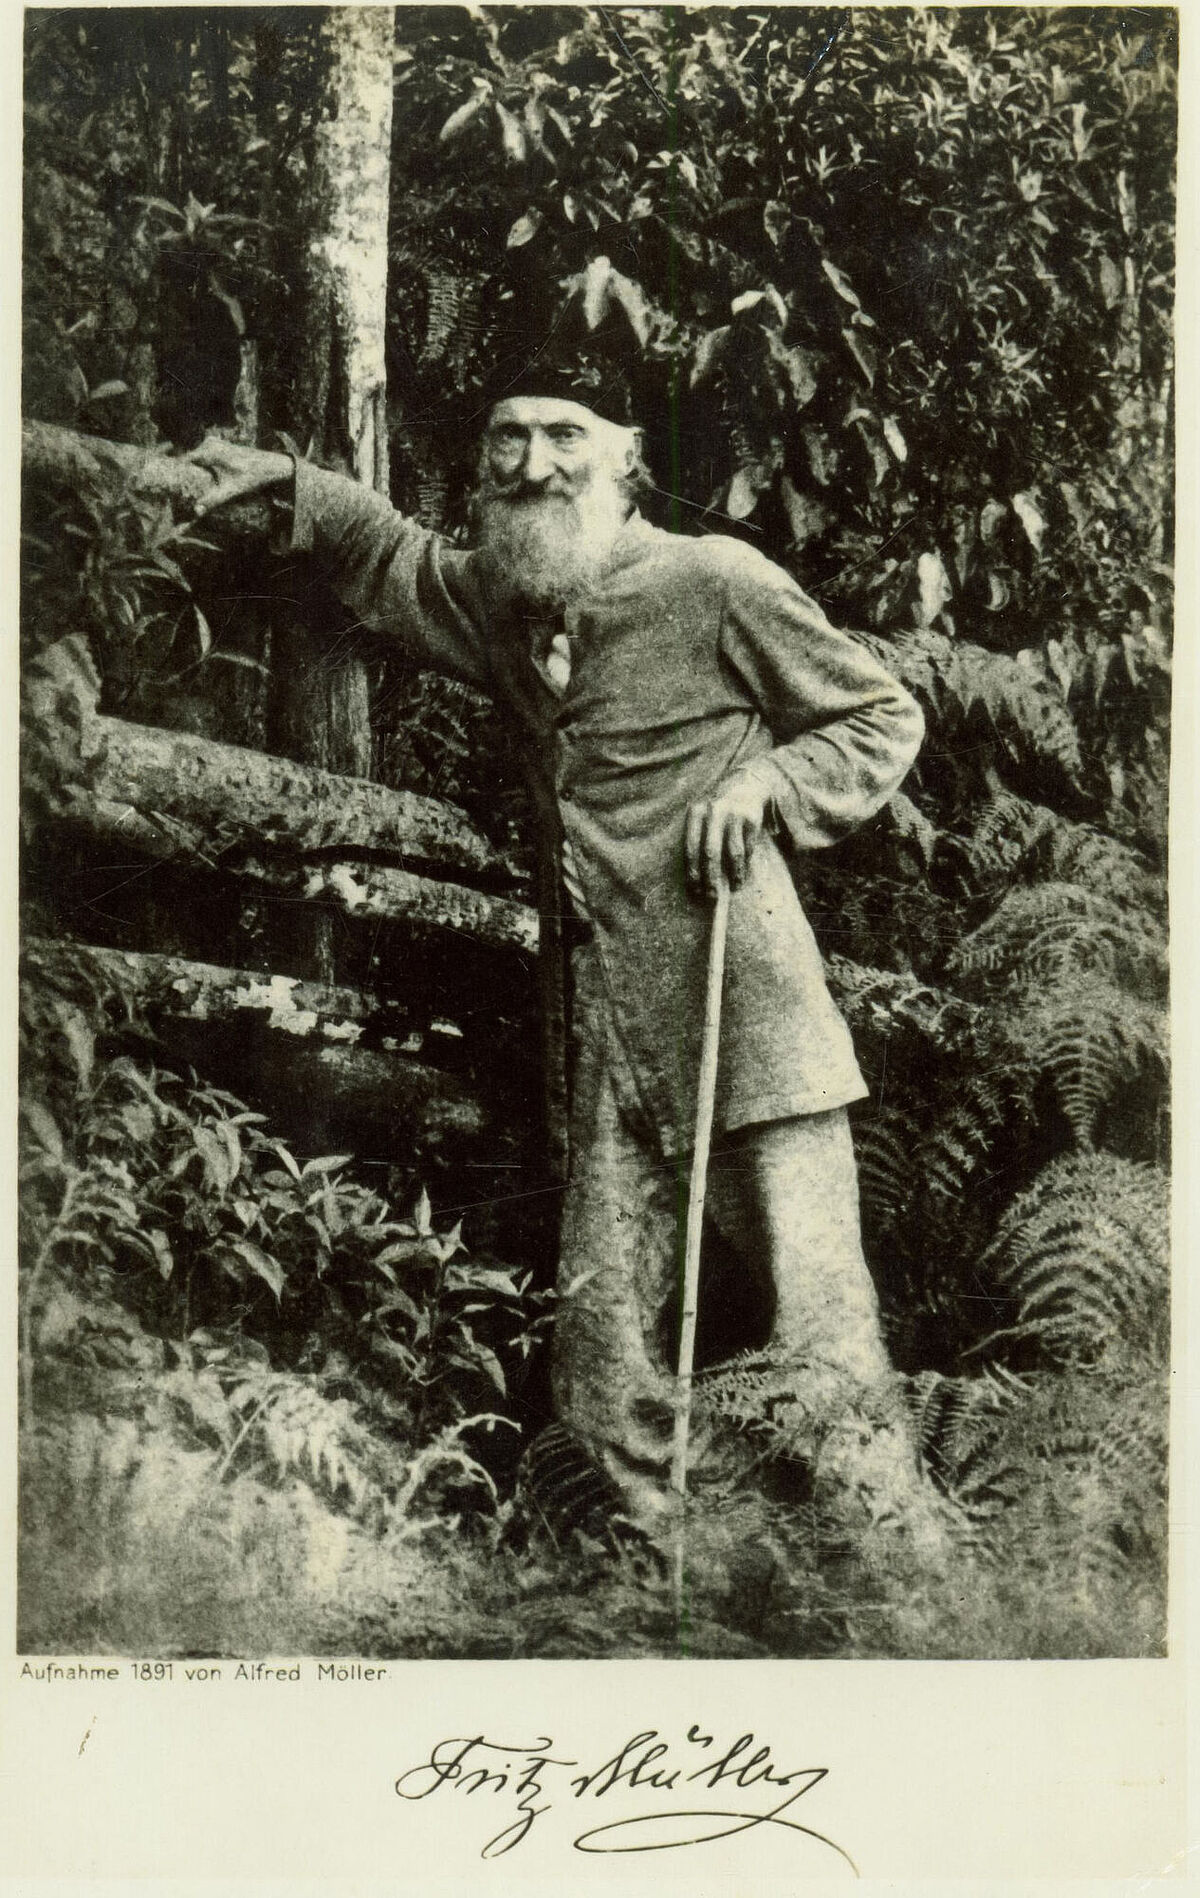 Johann Friedrich (Fritz) Theodor Müller standing in the Brazilian jungle on a historic postcard.